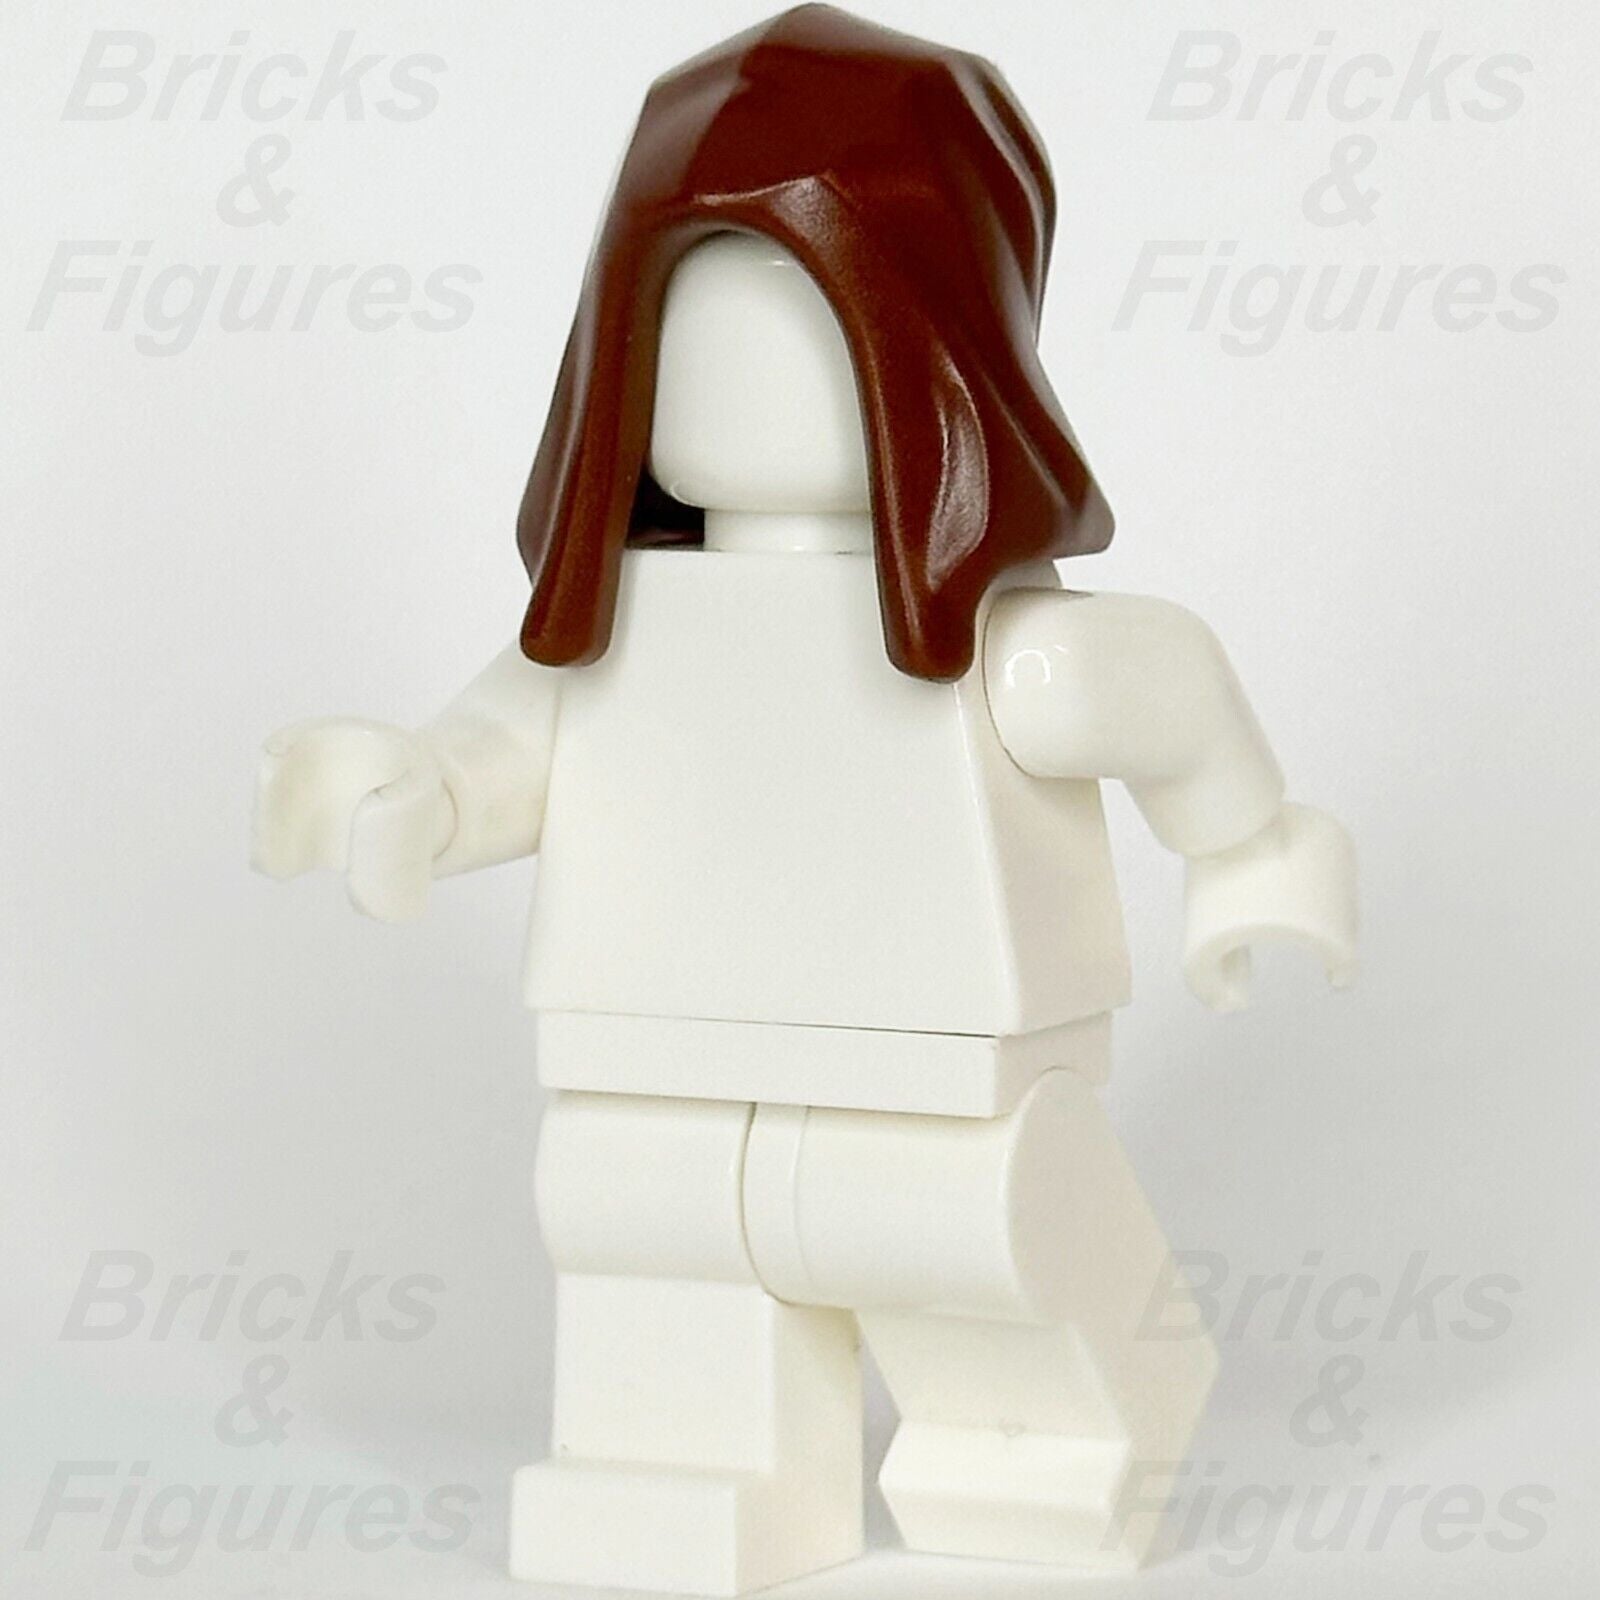 LEGO Star Wars Reddish Brown Robe Hood Minifigure Part for Jedi Cloak 59276